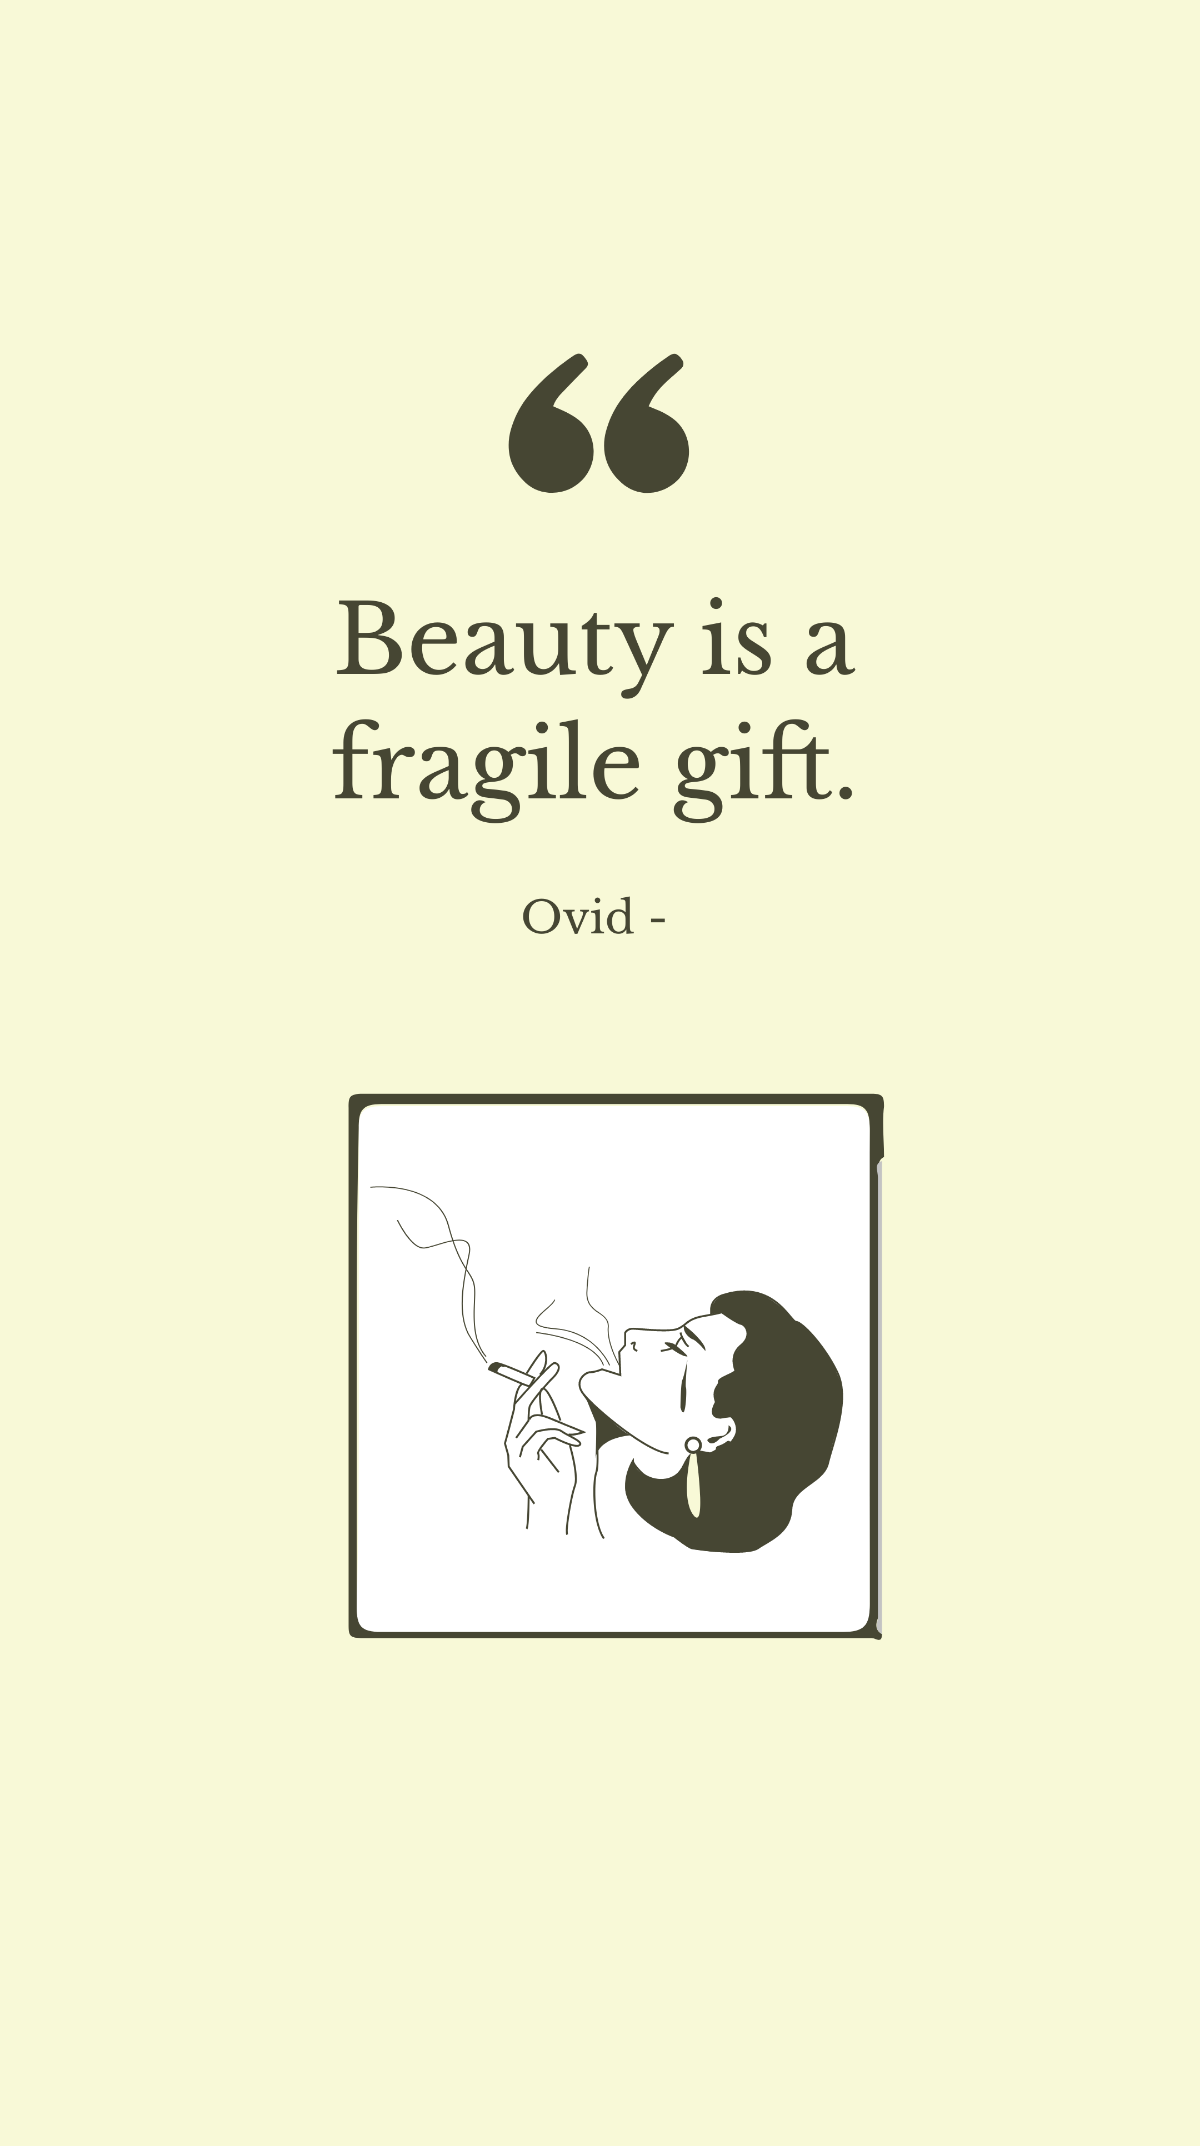 Ovid - Beauty is a fragile gift.